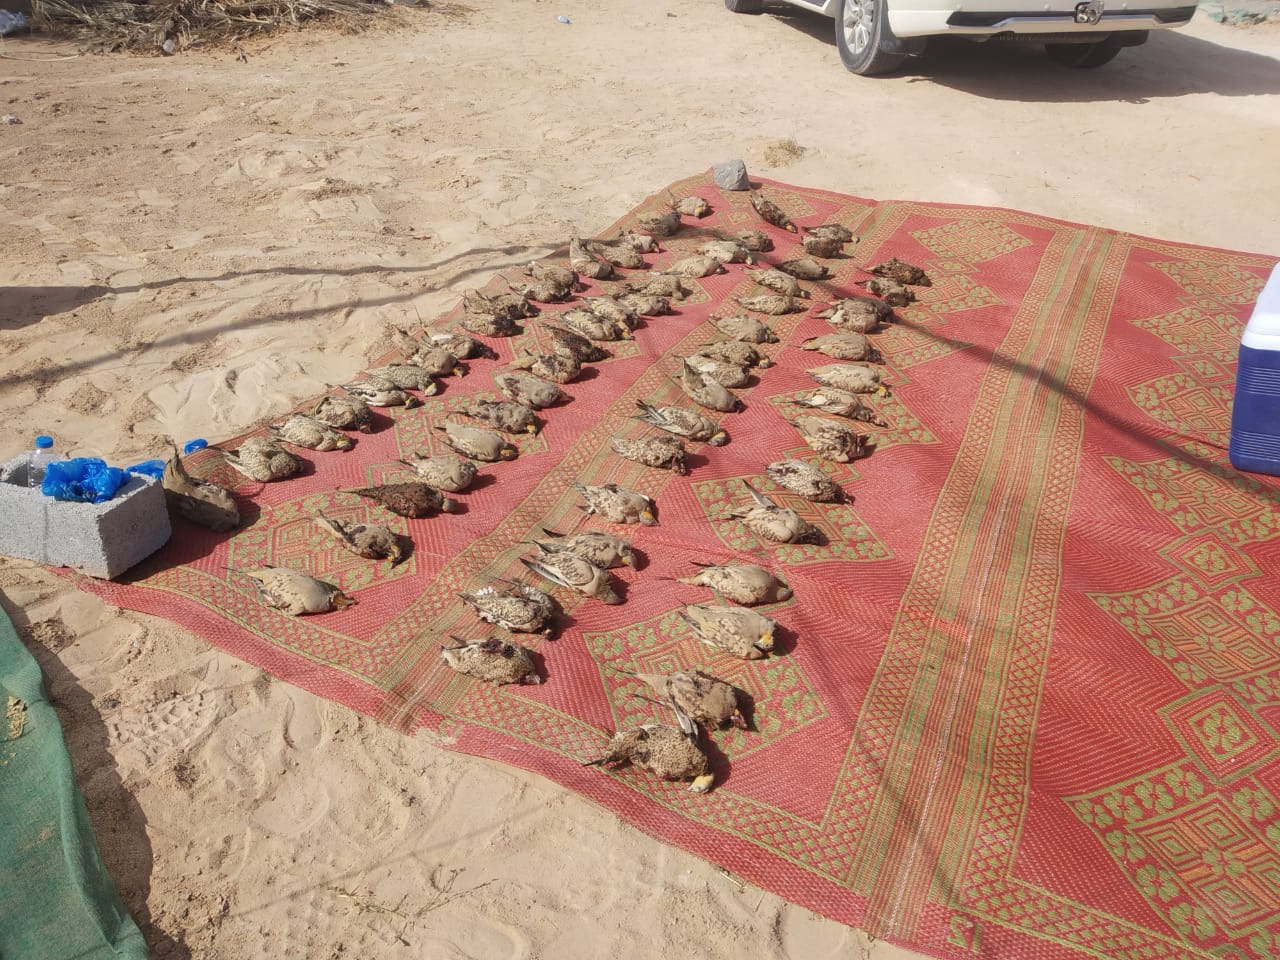 Wildlife poachers arrested in Oman